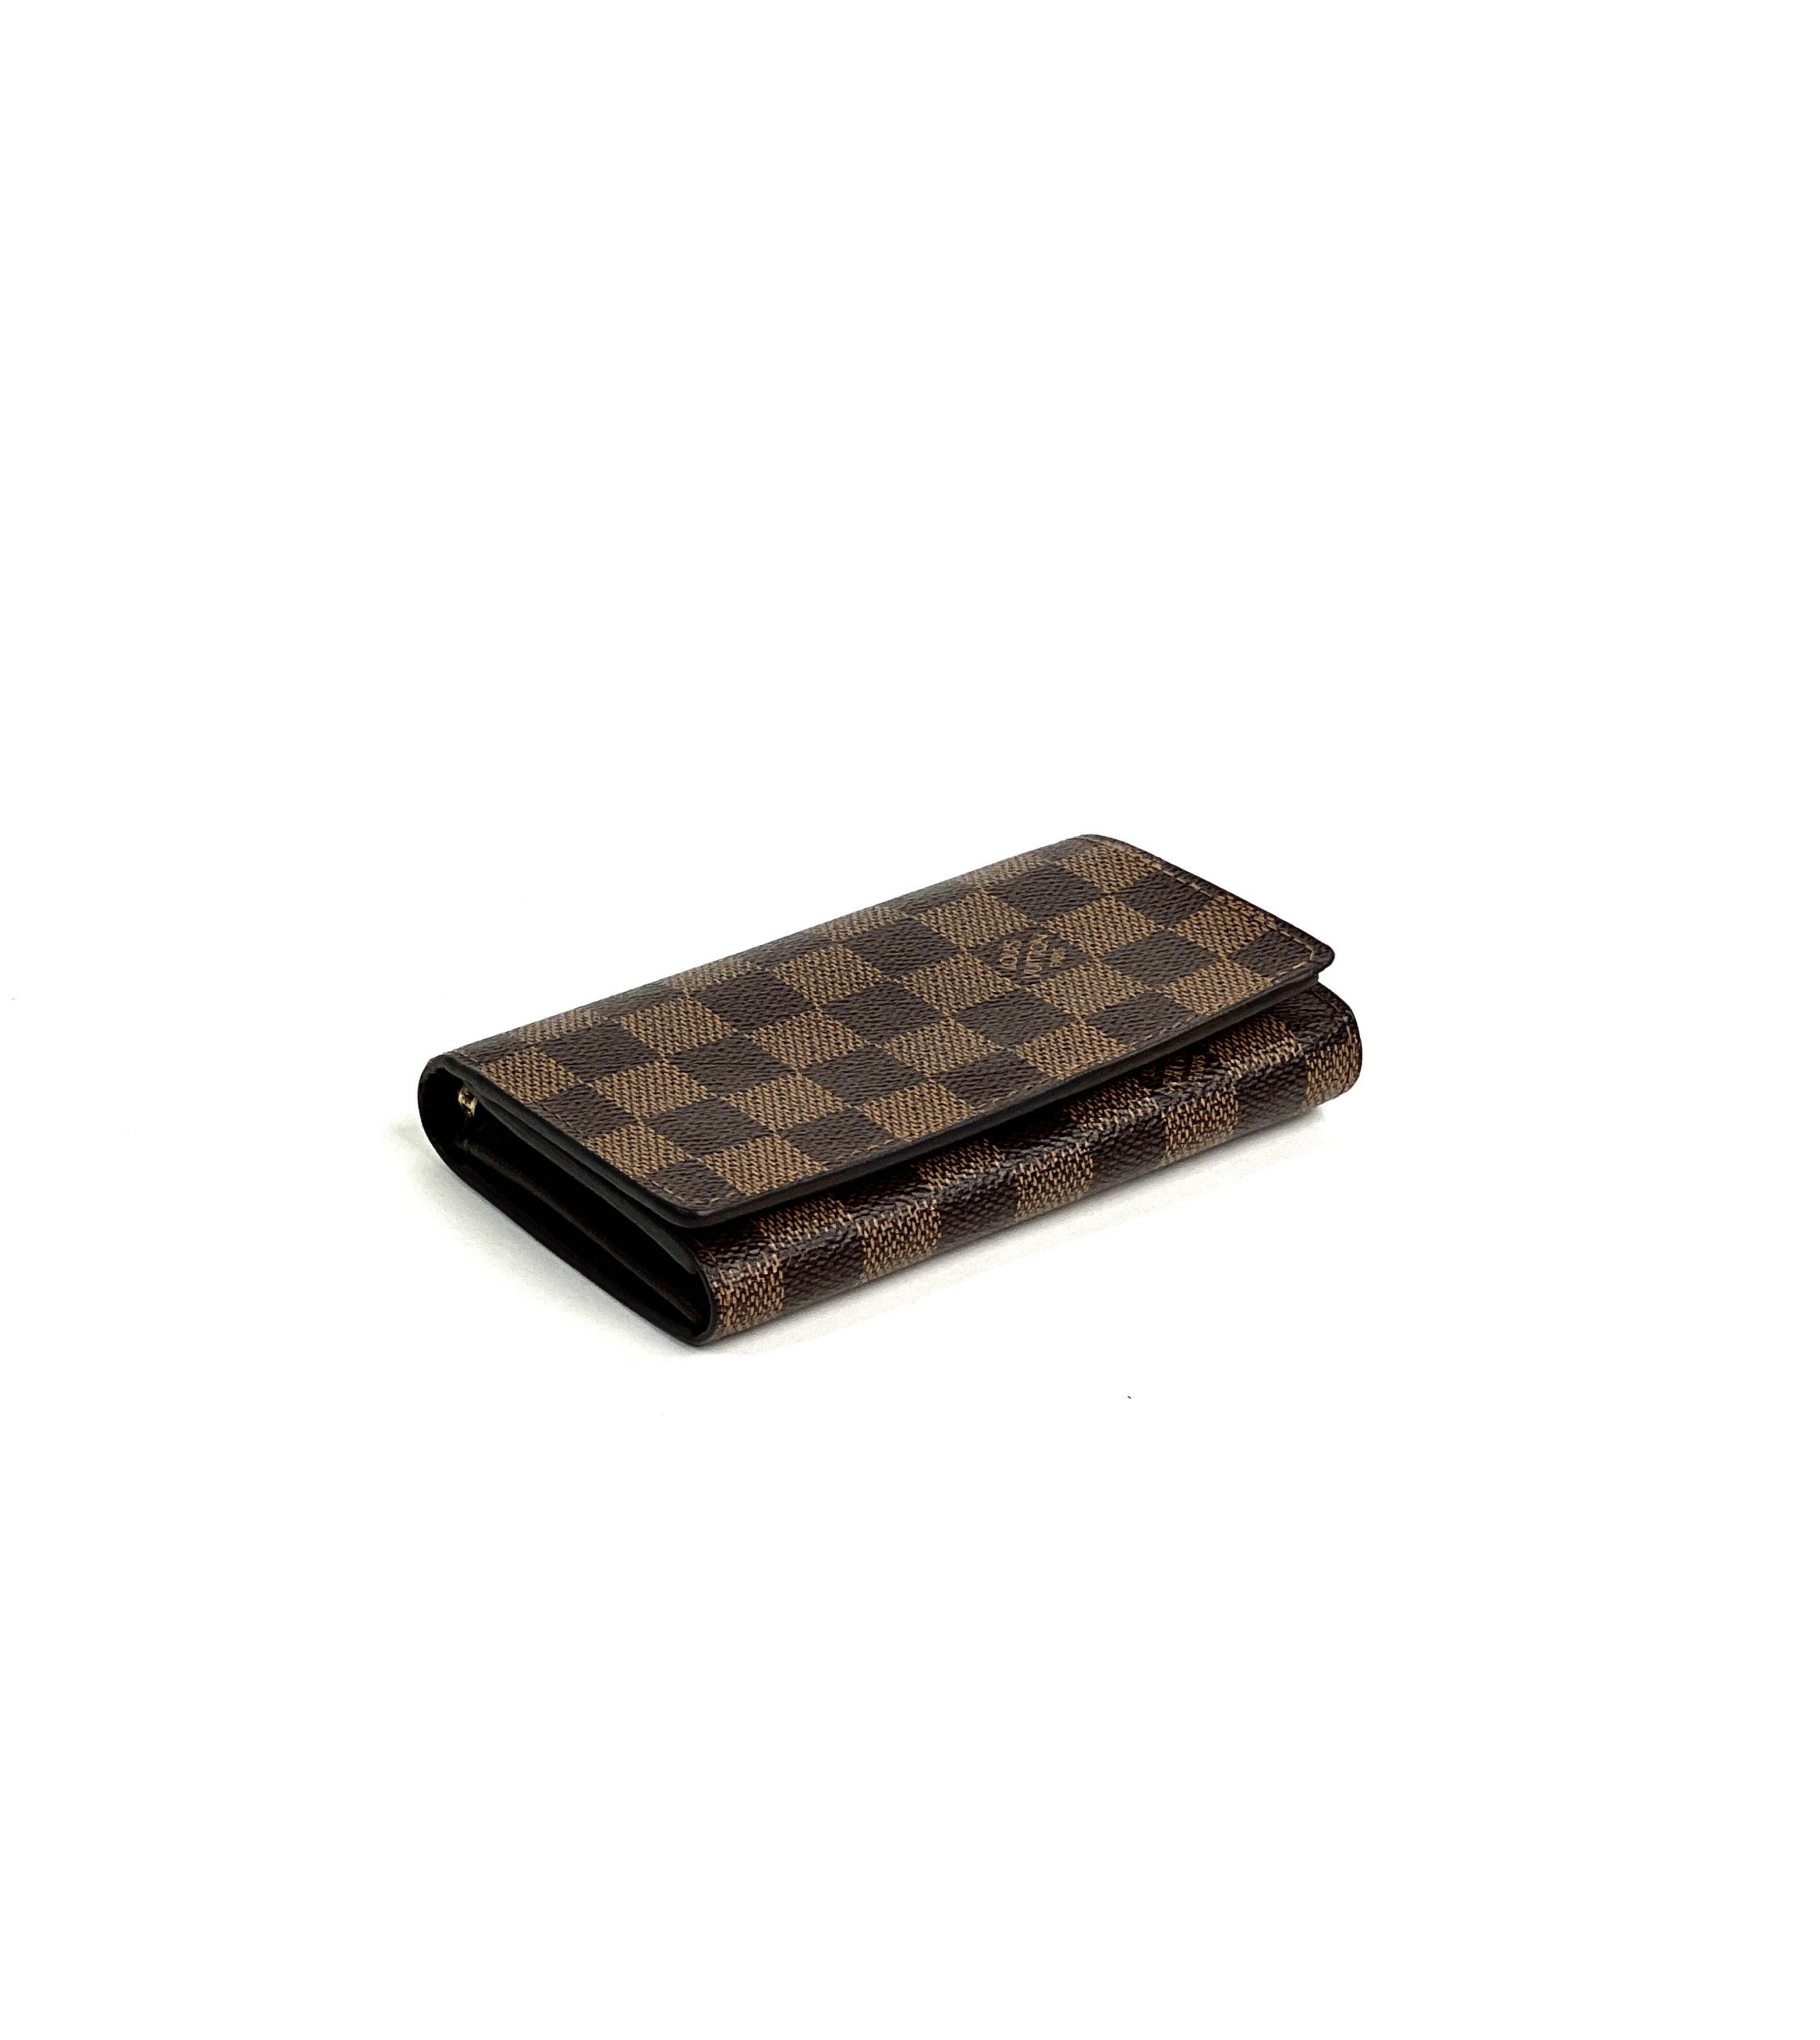 Louis Vuitton Card Holder Wallet - Damier Ebene